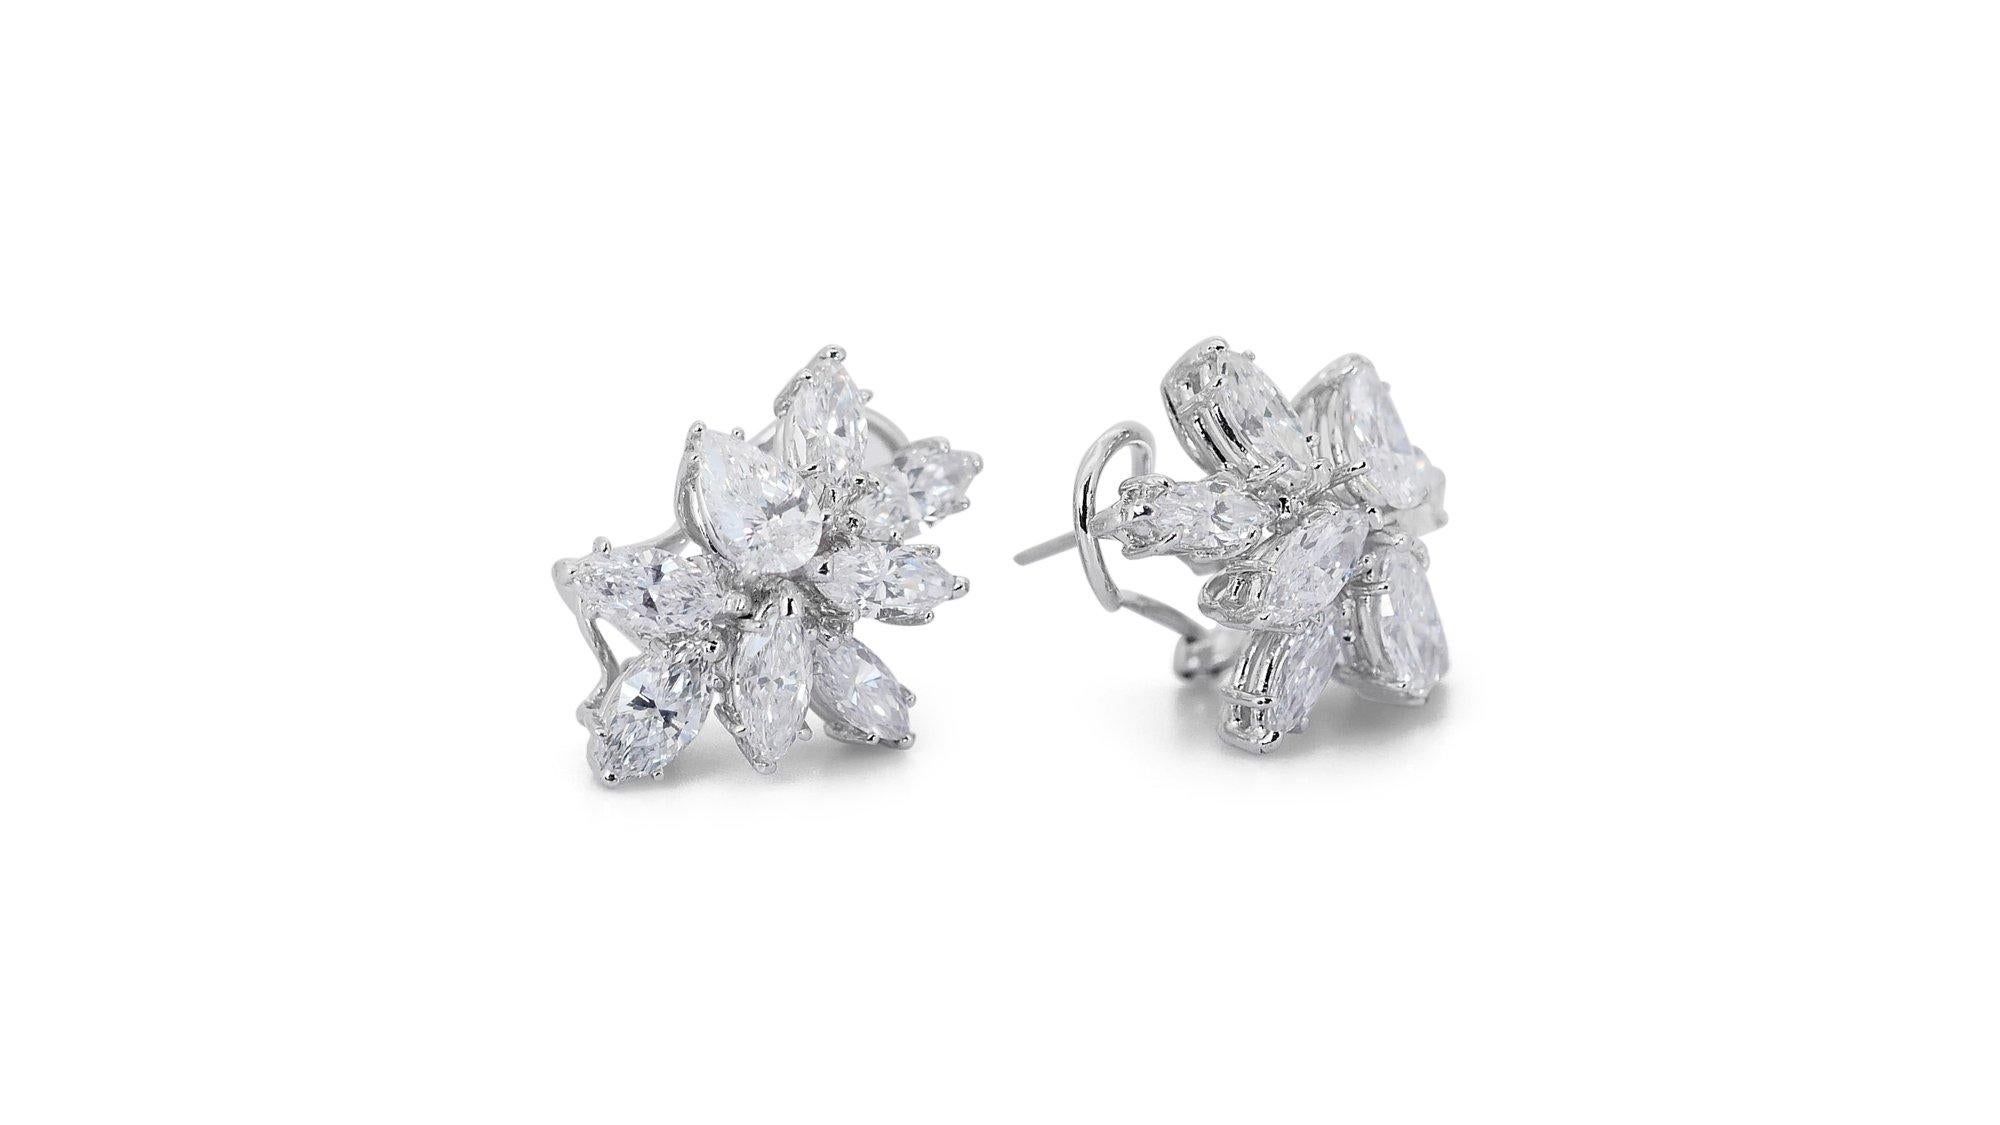 18 kt. White Gold Diamond Earrings with 6 ct Total Natural Diamonds - IGI Cert 1